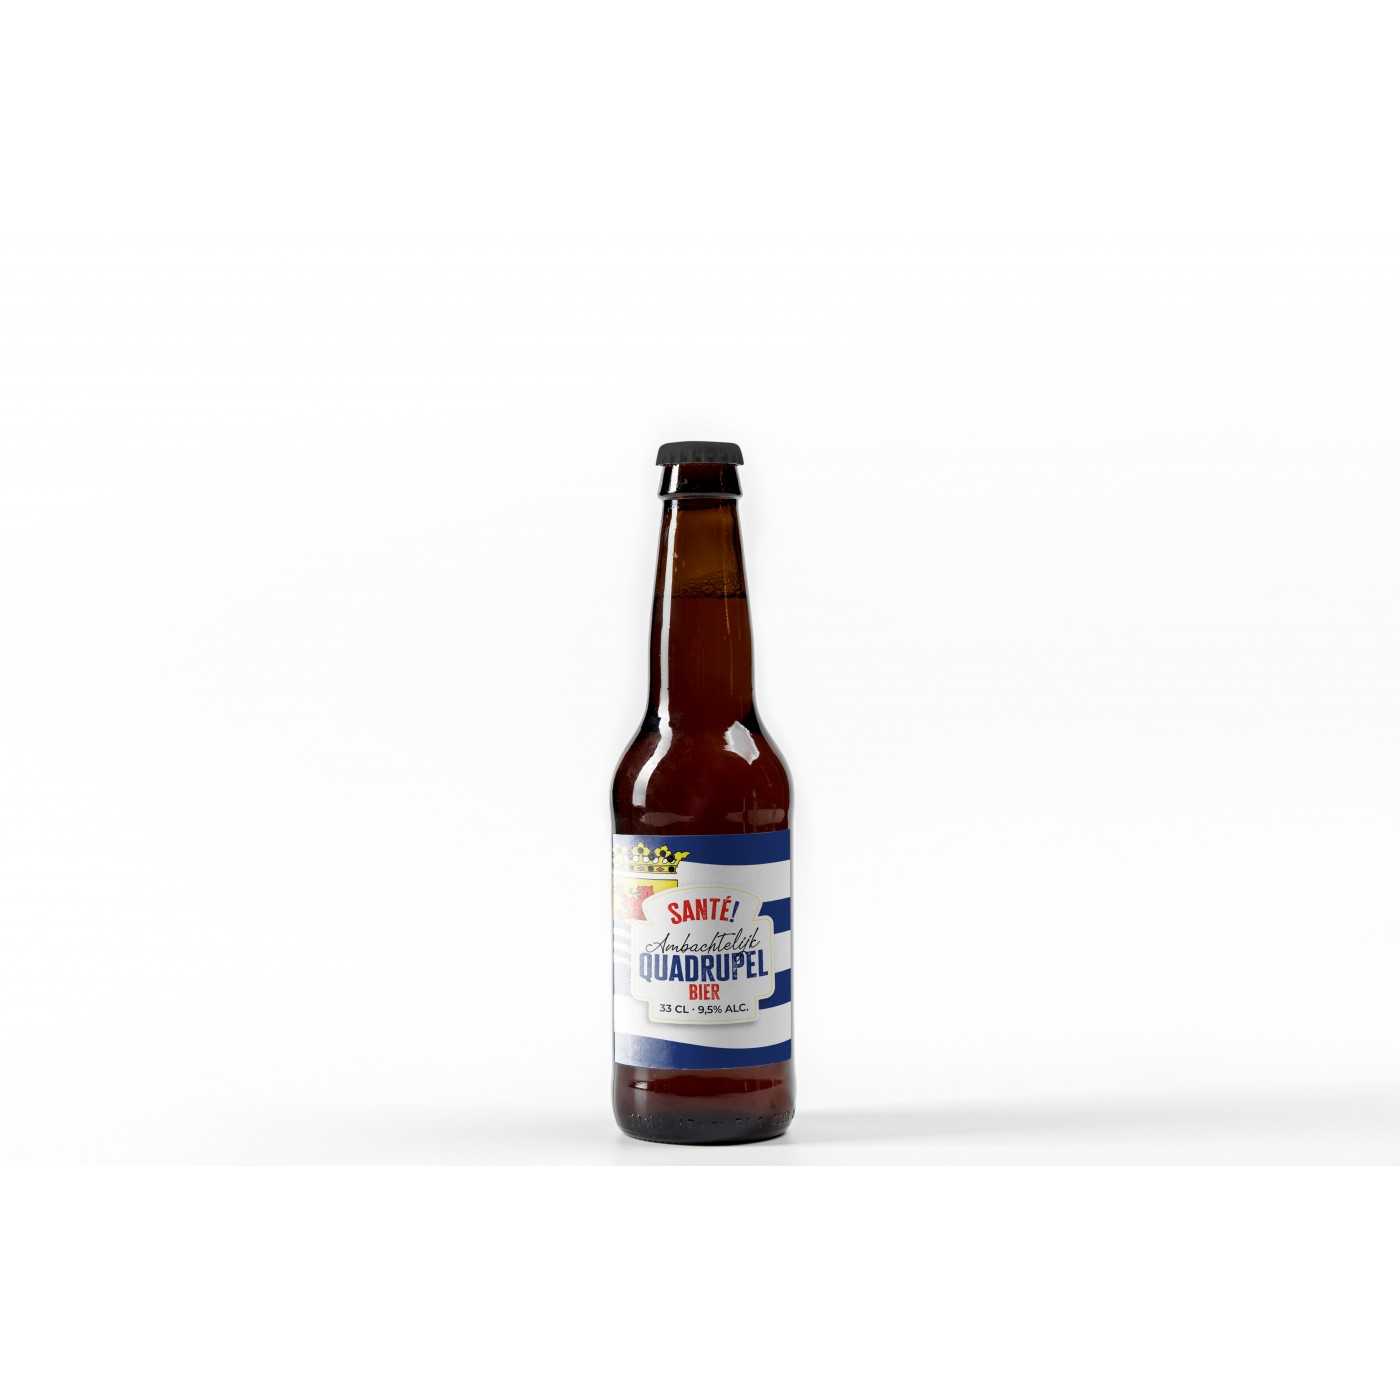 Zeeuws Bier Quadrupel 33cl 9,5% 12fl